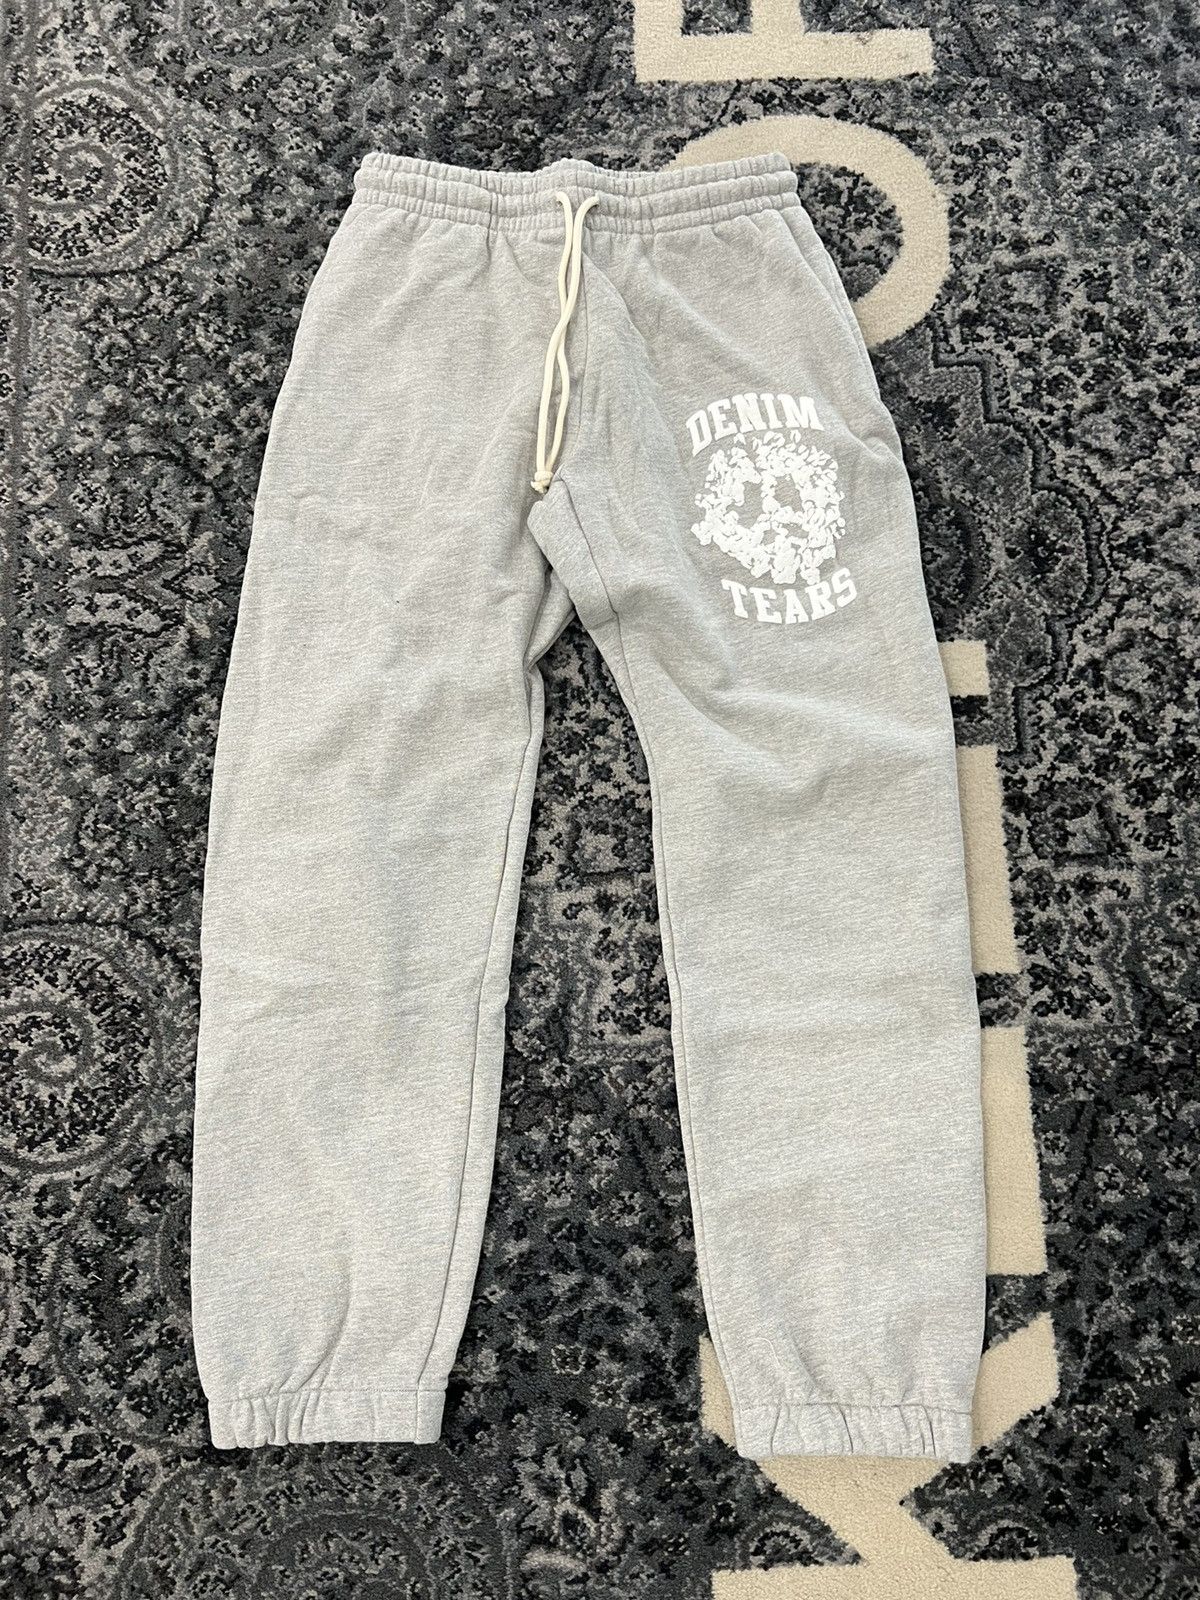 Pre-owned Denim Tears “university” Sweatpants - Size Medium - (grey)